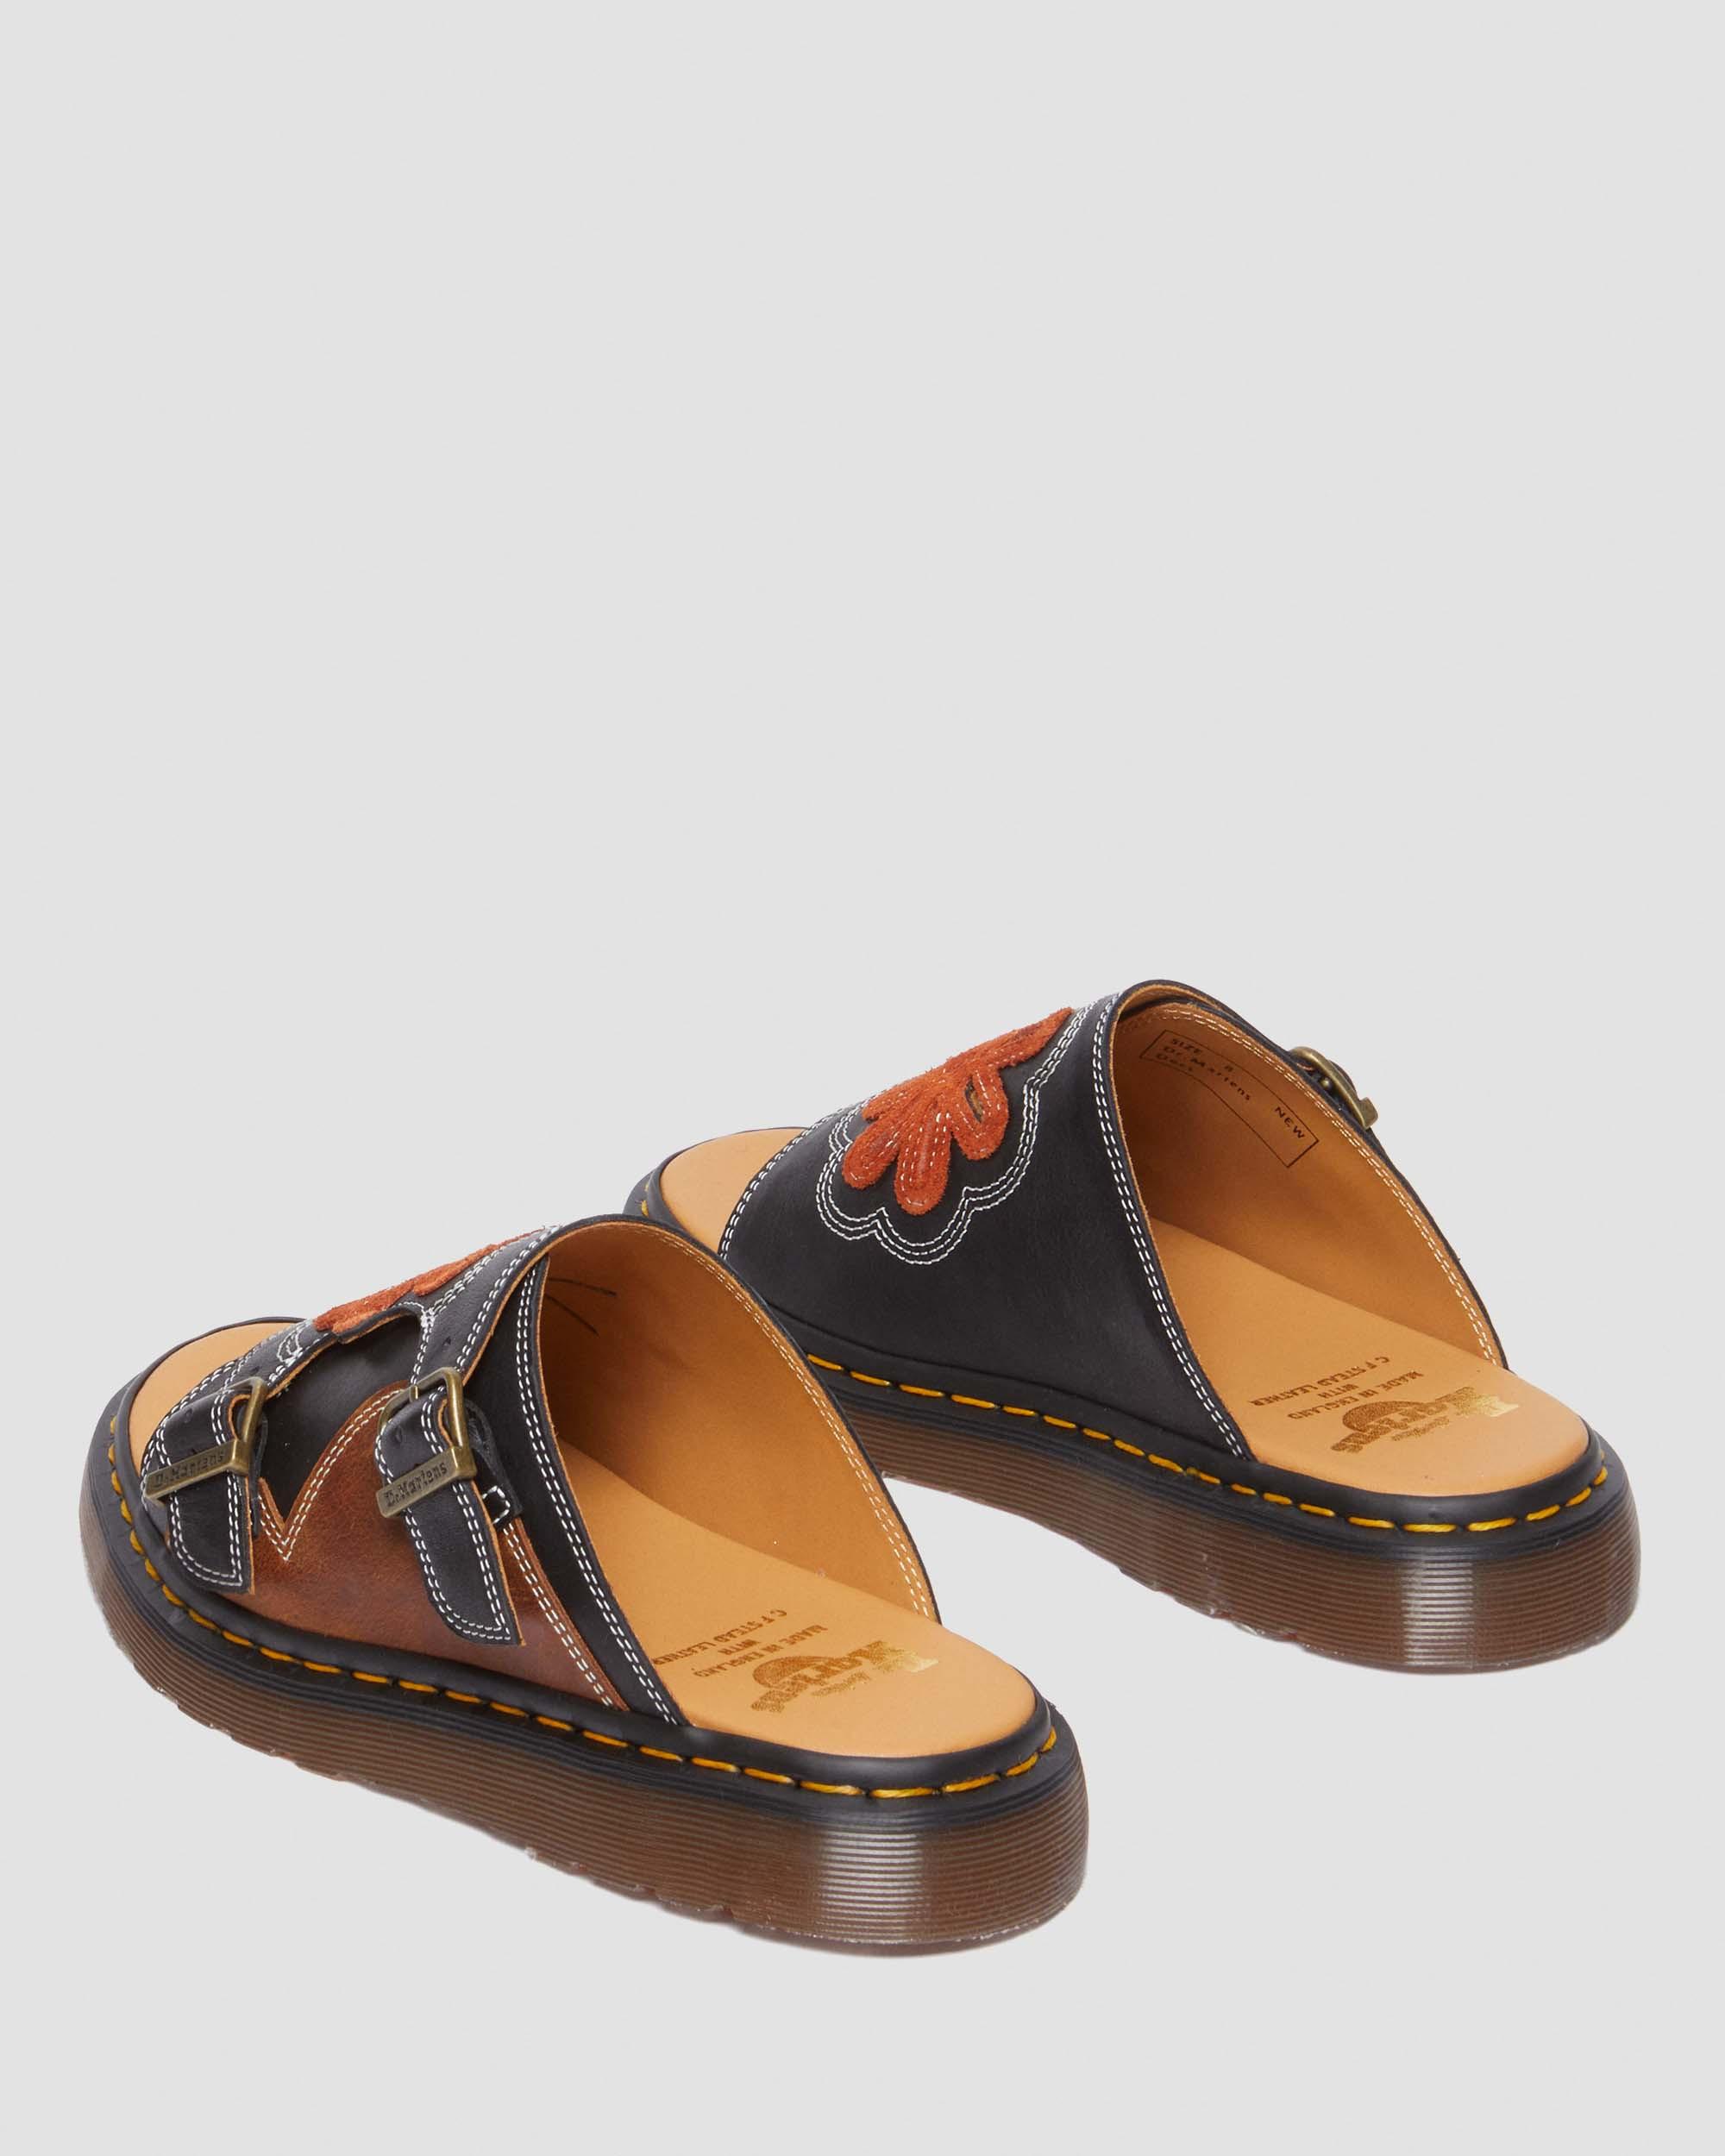 Dayne Made in England Leather & Suede Applique Slides in Black+Brown+Rust Orange